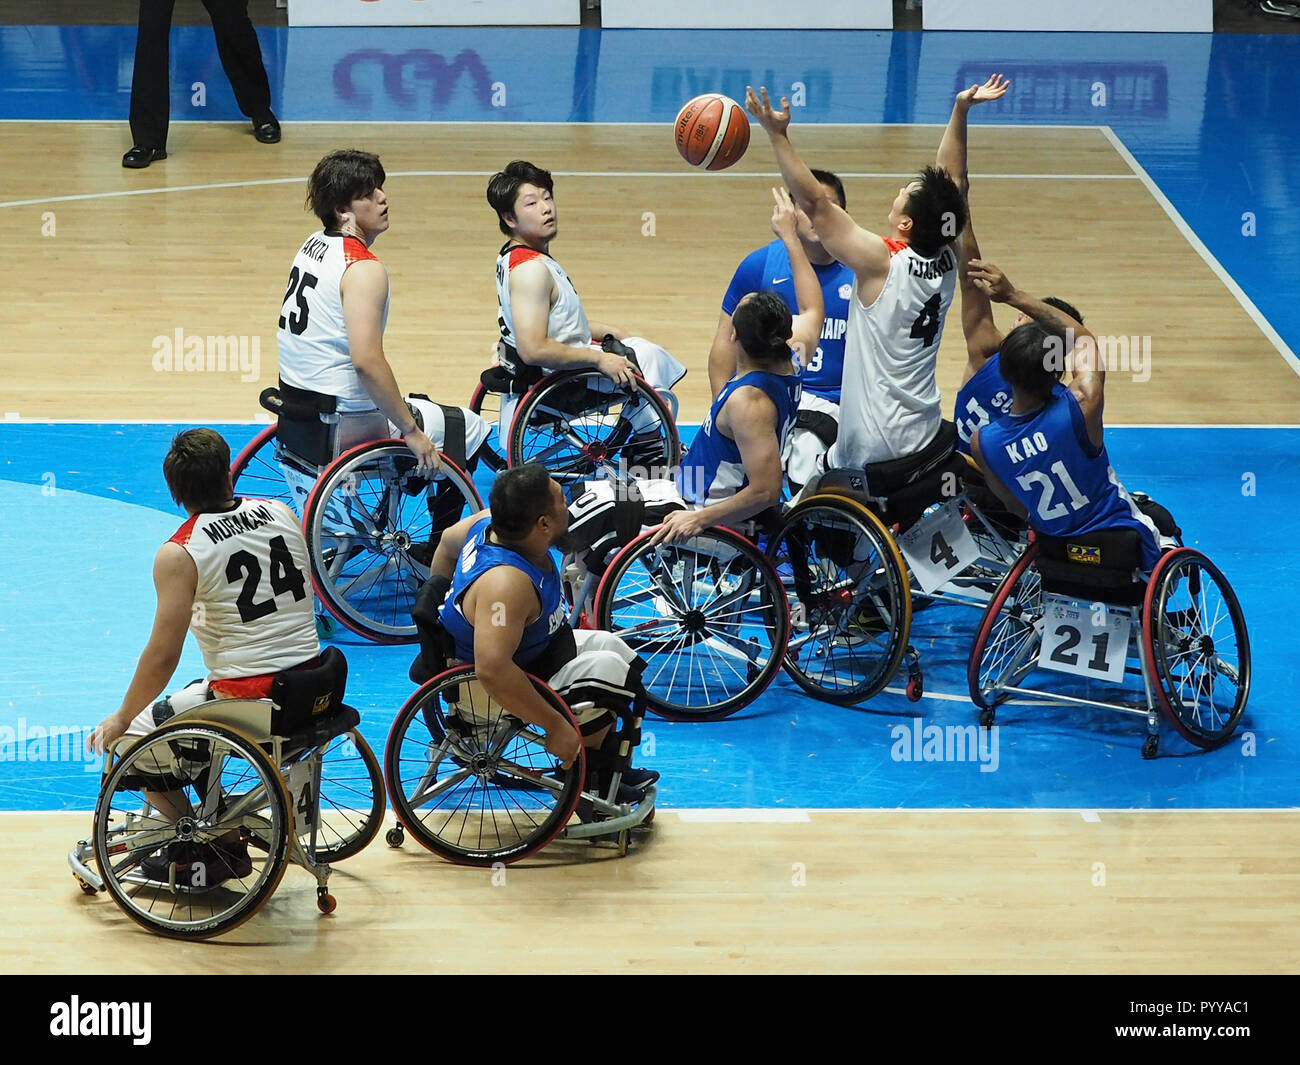 Asian Para Games 2018 Wheel Chair Basket Ball Stock Photo